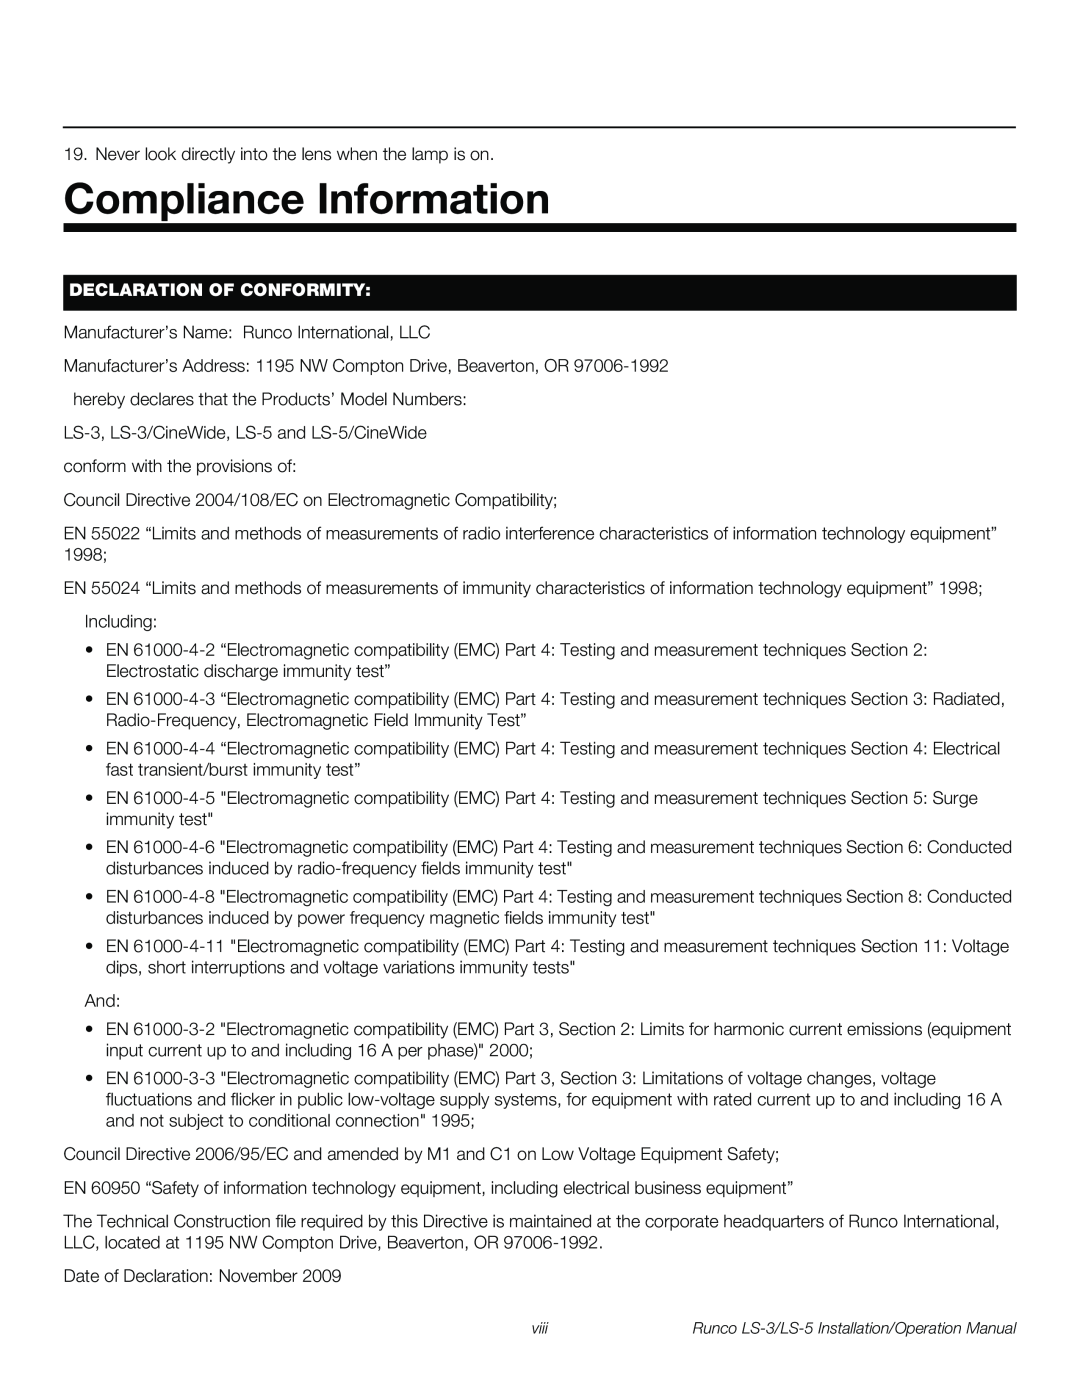 Runco LS-5, LS-3 operation manual Compliance Information, Declaration Of Conformity 